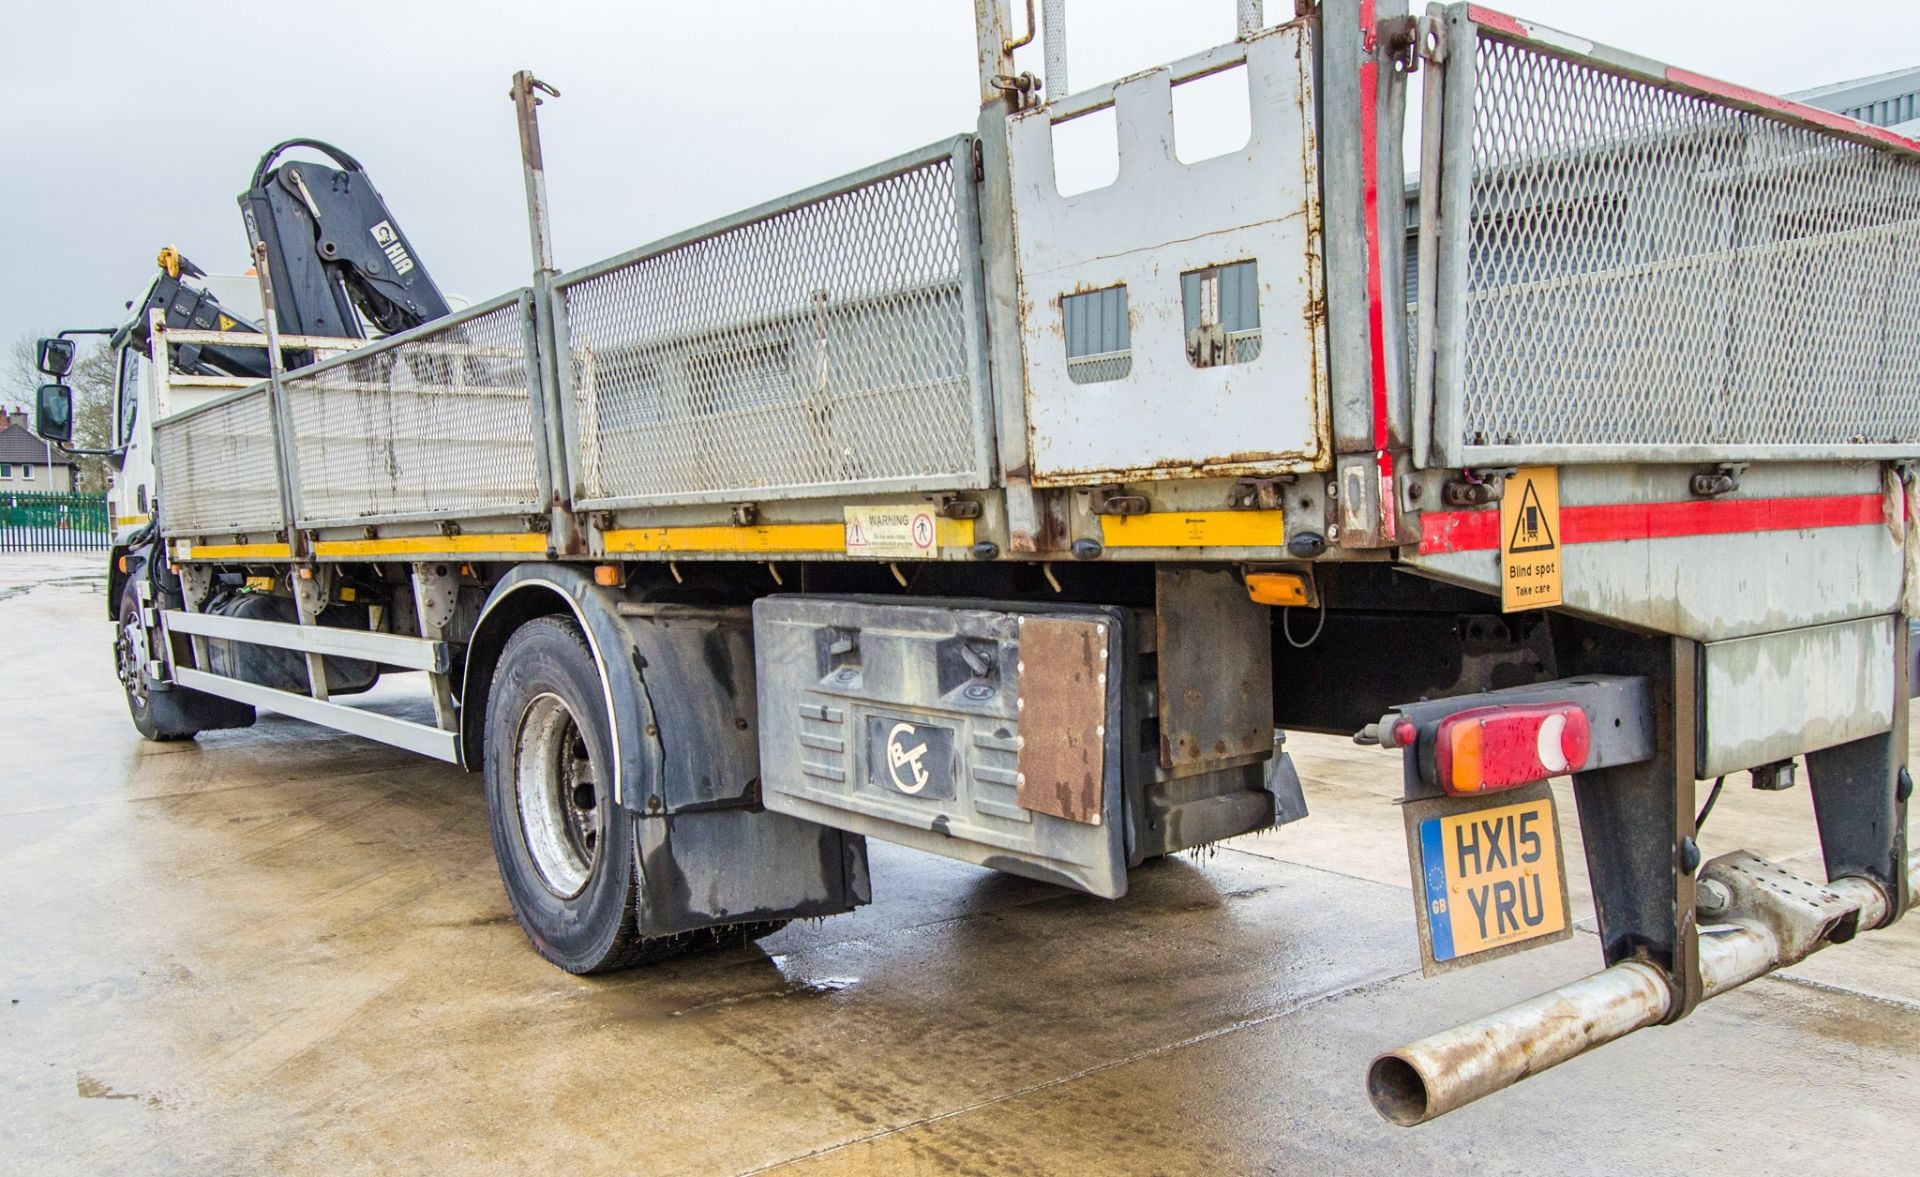 DAF LF220 4x2 18 tonne drop side crane lorry Registration Number: HX15 YRU Date of Registration: - Image 12 of 38